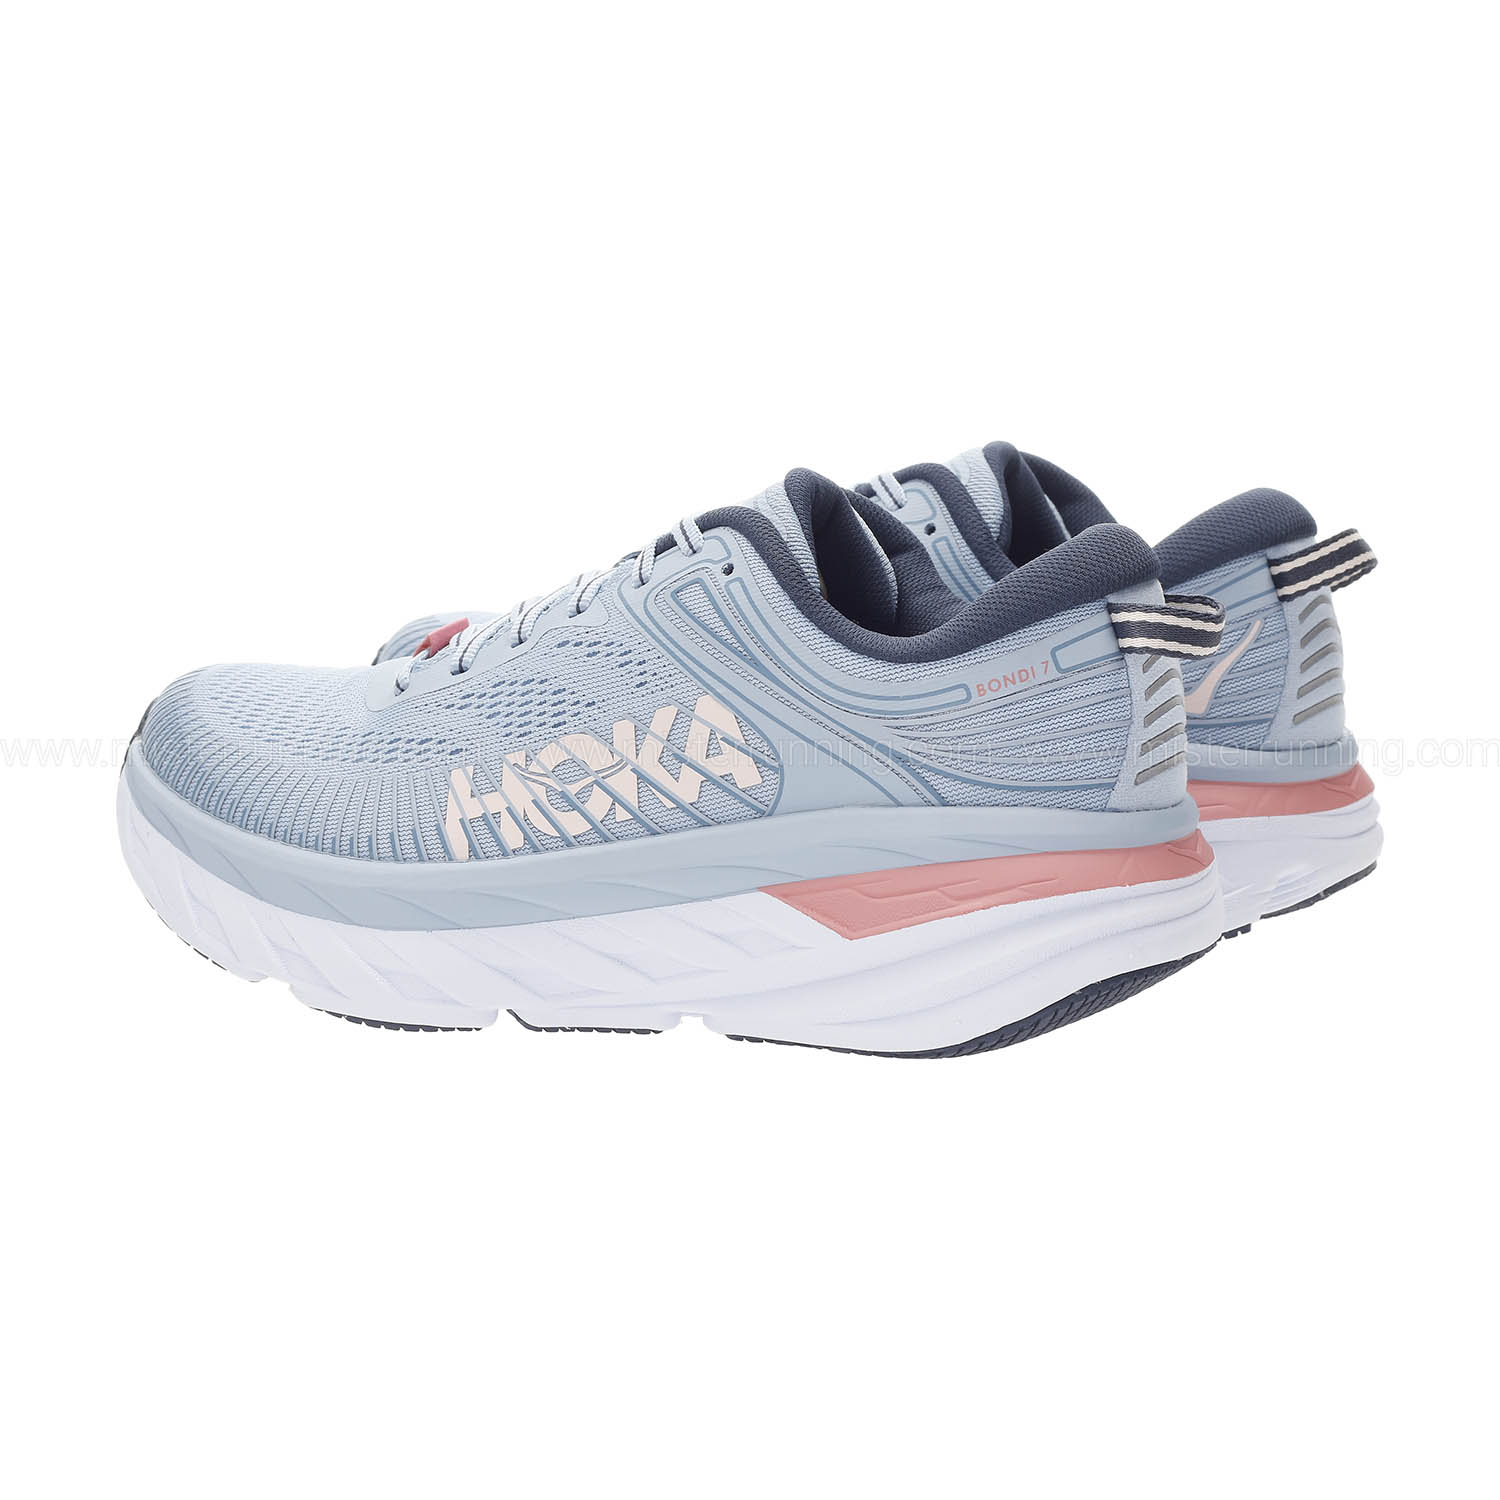 Hoka One One Bondi 7 Women's Running Shoes - Blue Fog/Blue